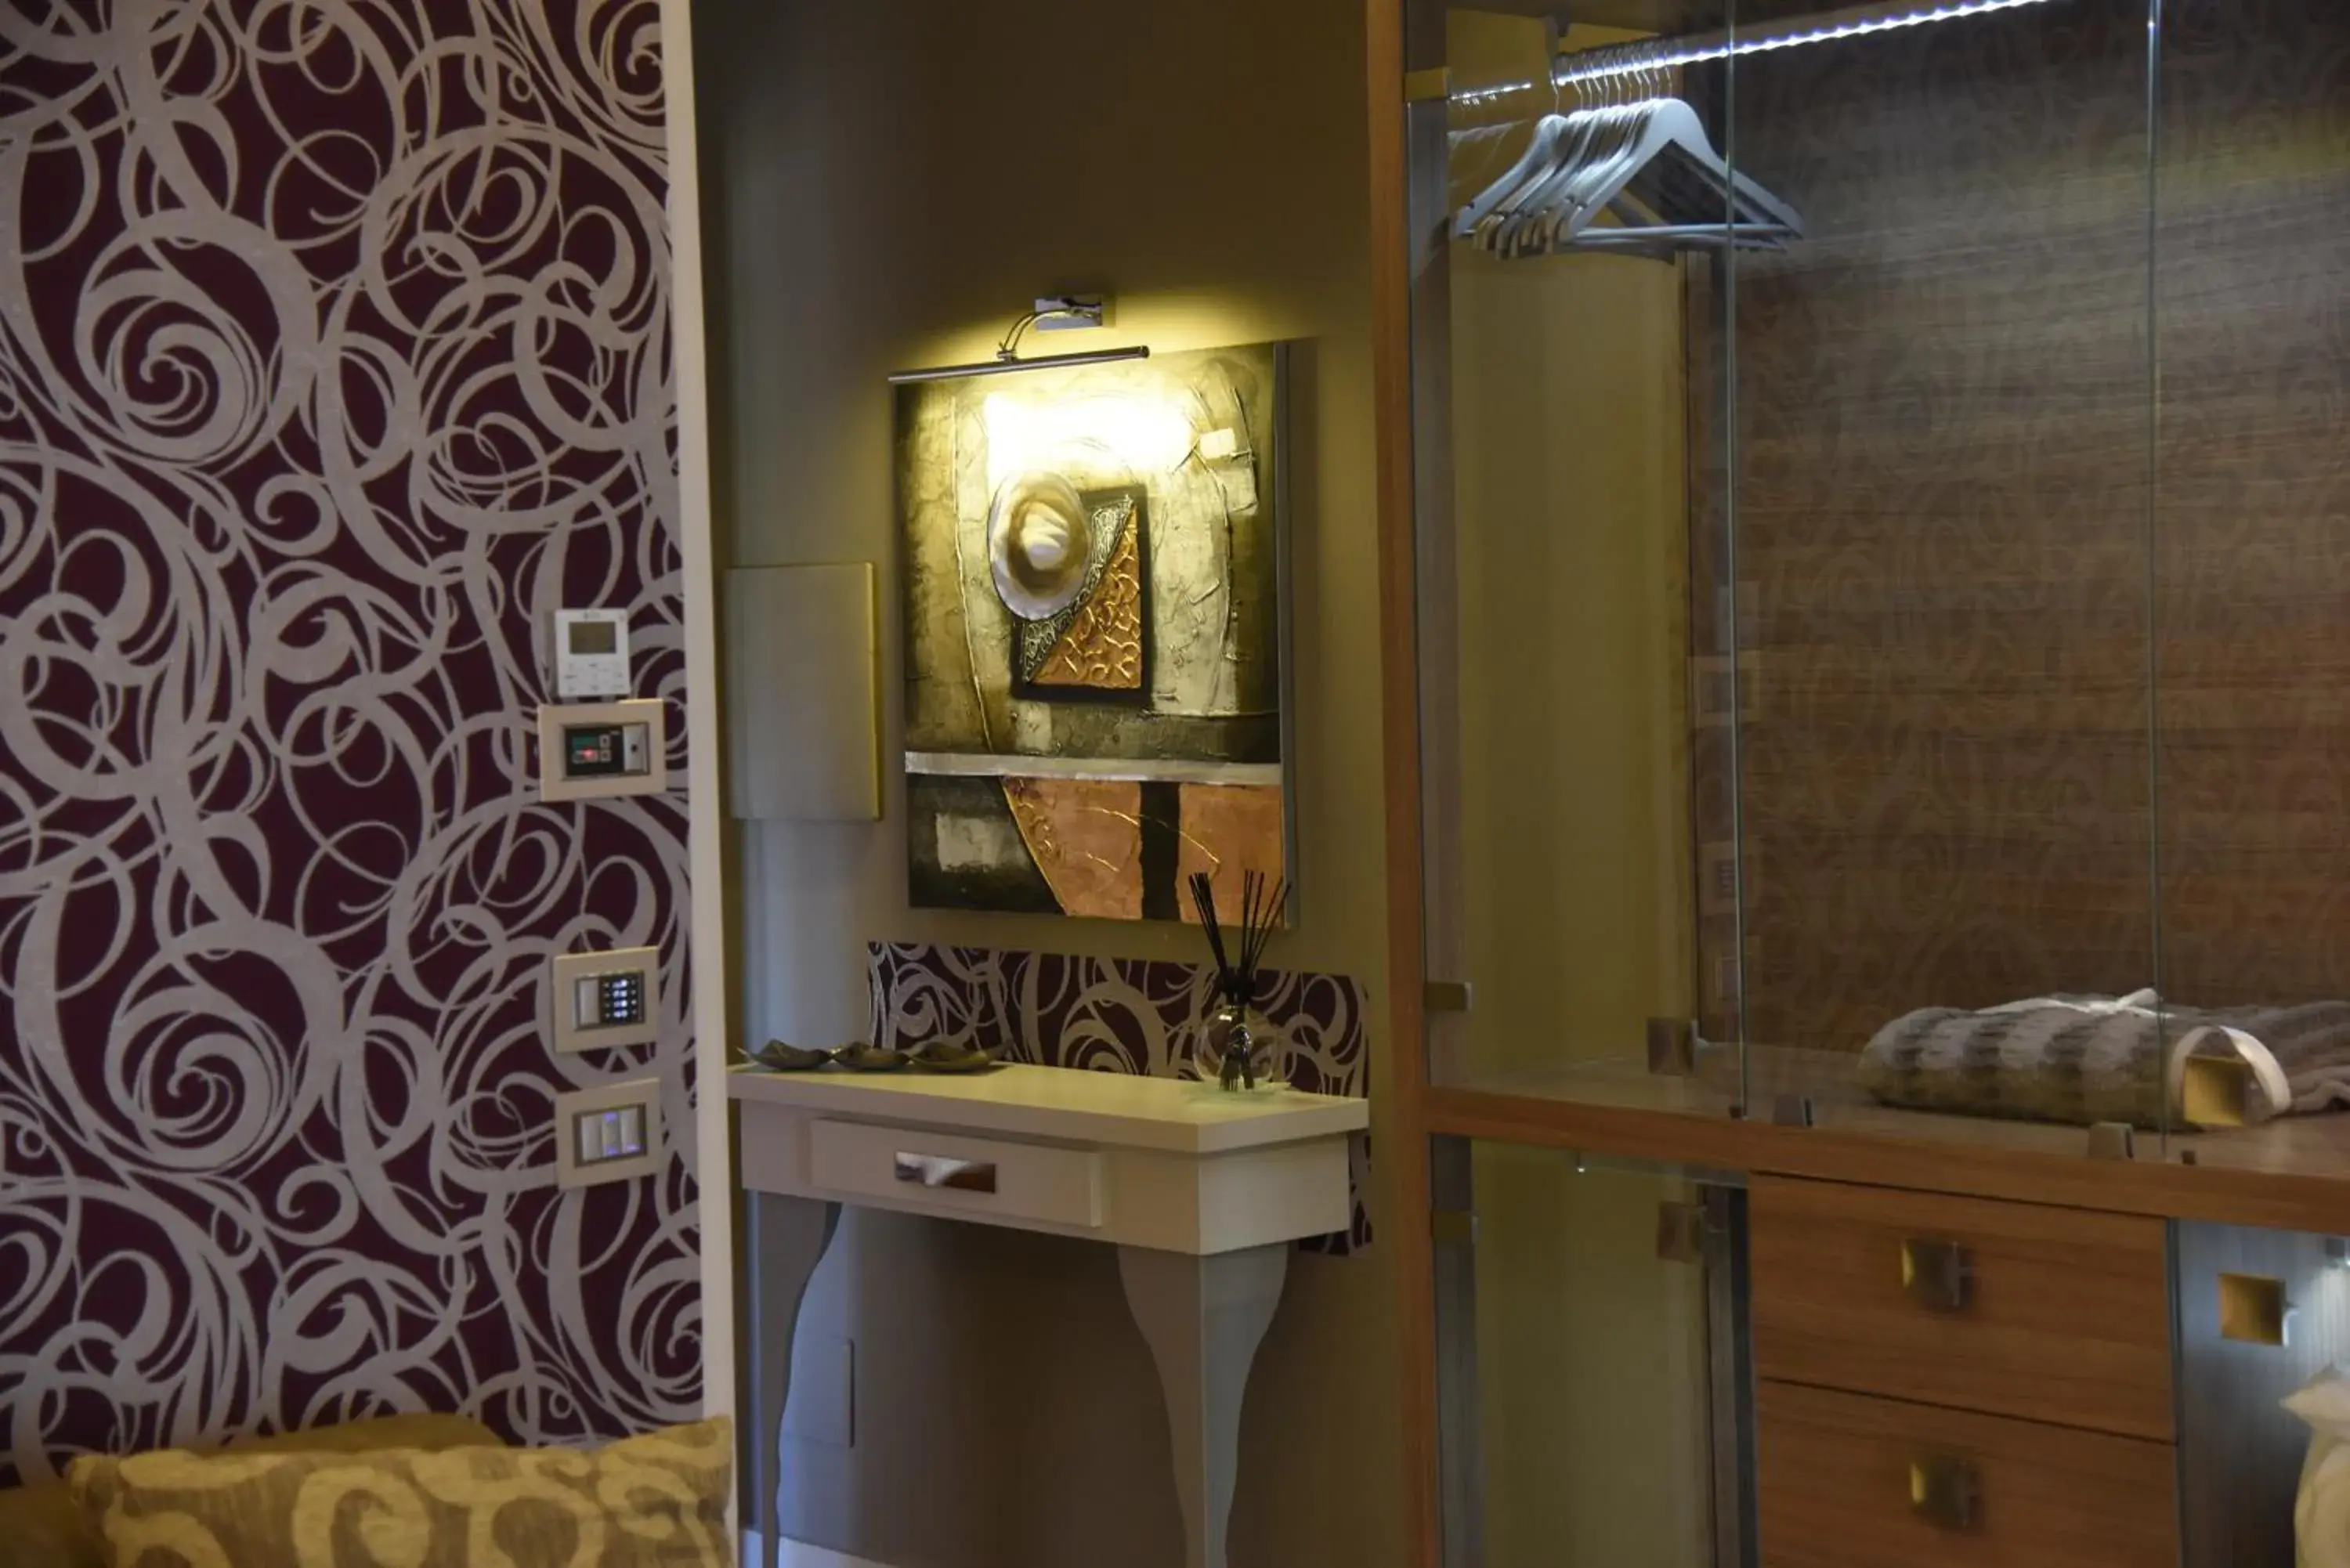 Decorative detail, Bathroom in Hotel Niagara